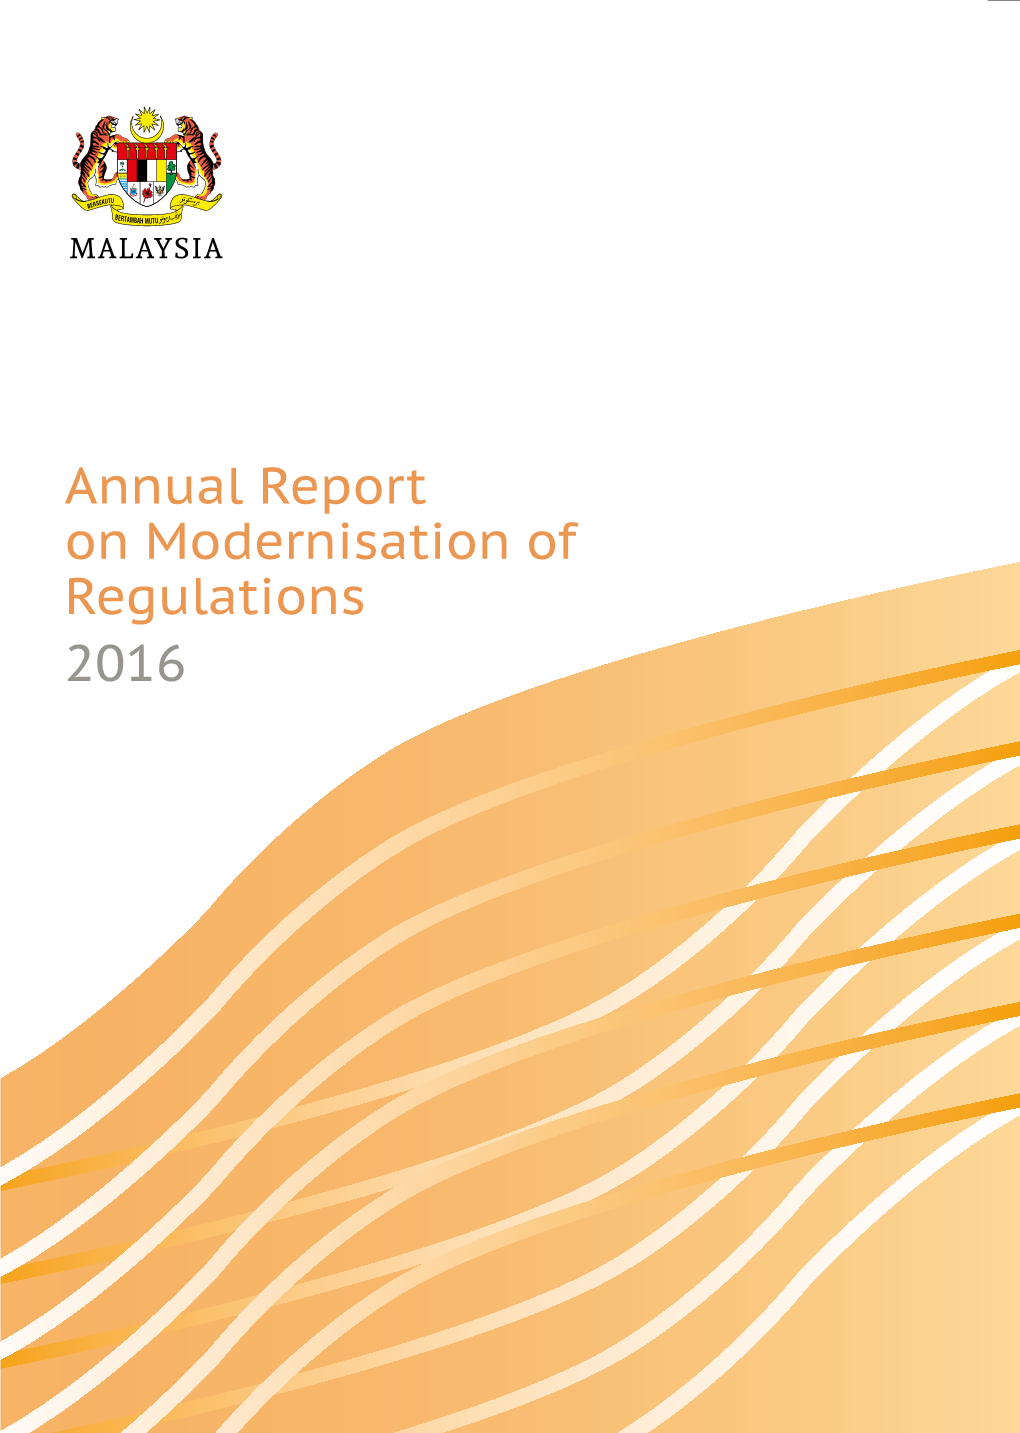 Annual Report on Modernisation of Regulations 2016 Provides Useful Information on Malaysia’S Regulatory Reform Journey